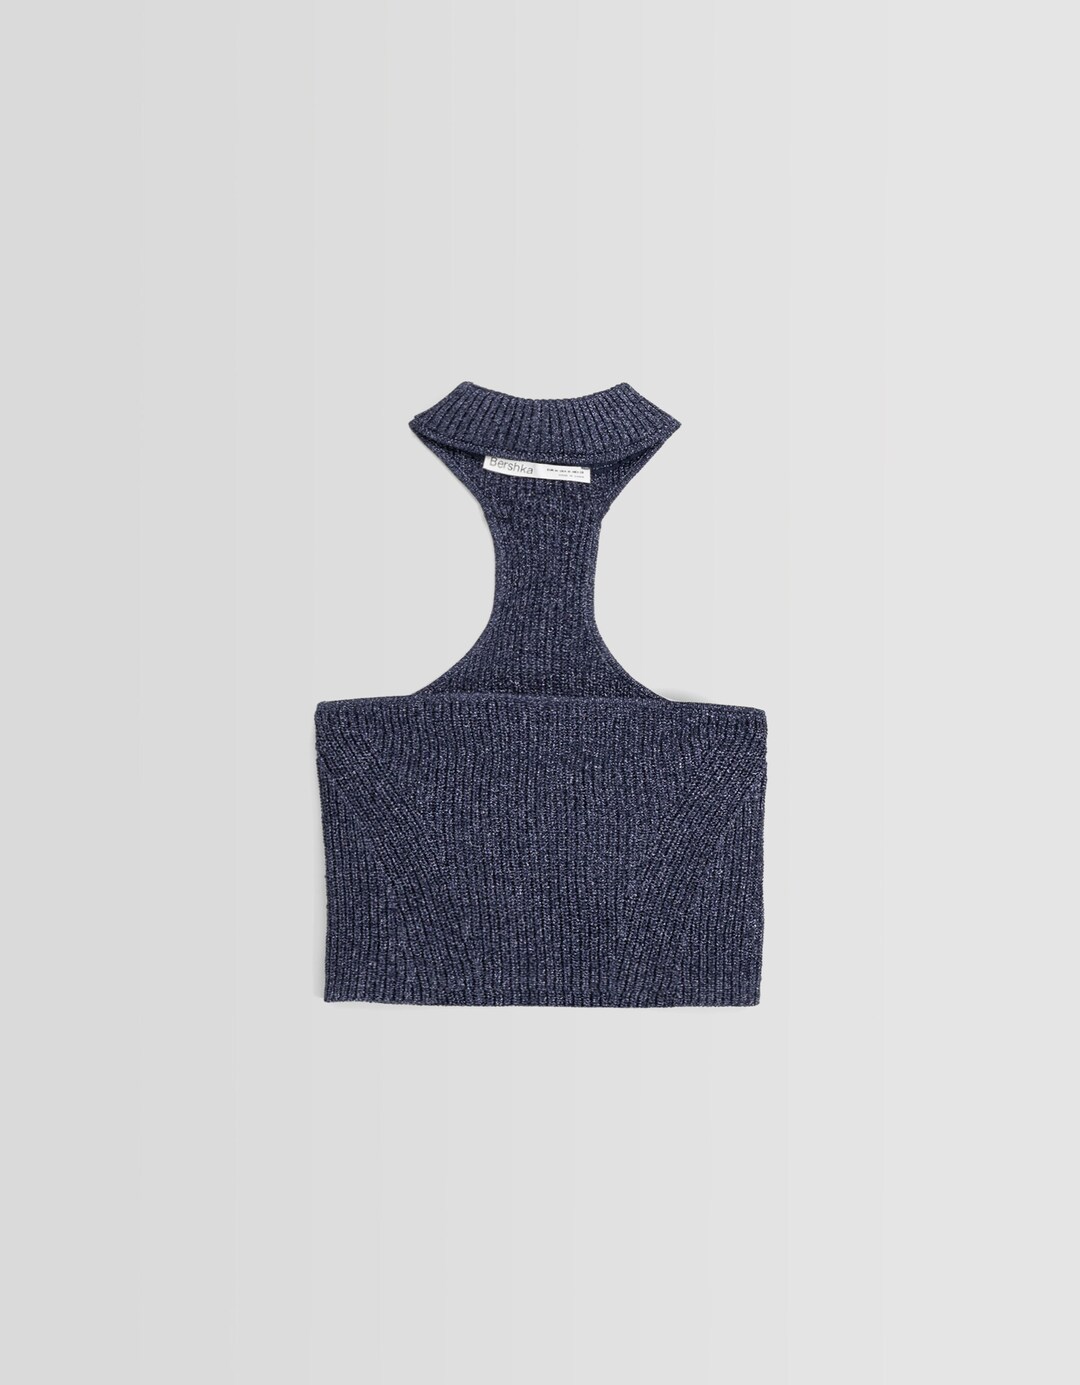 Shimmery knit choker top